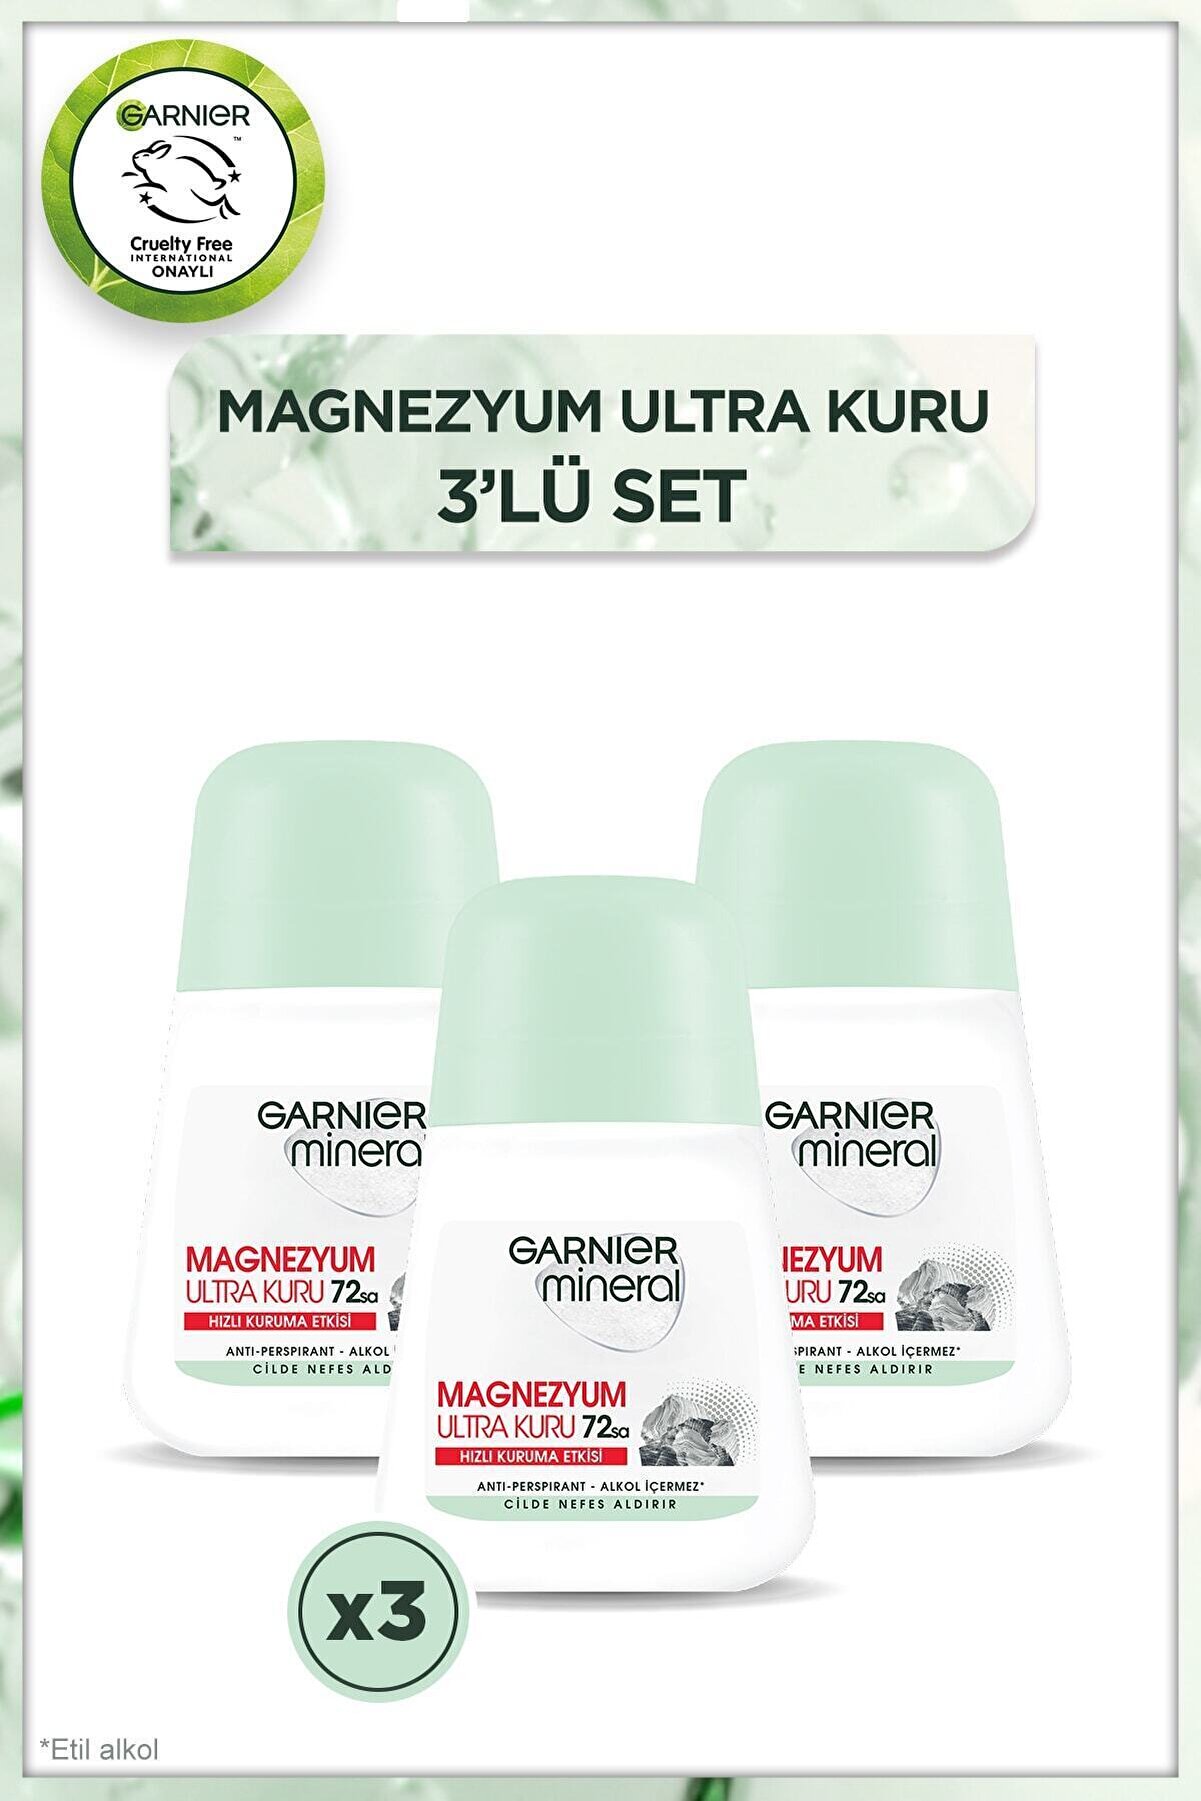 Garnier 3'lü Garnier Mineral Magnezyum Ultra Kuru Roll-On Kadın Deodorant Seti